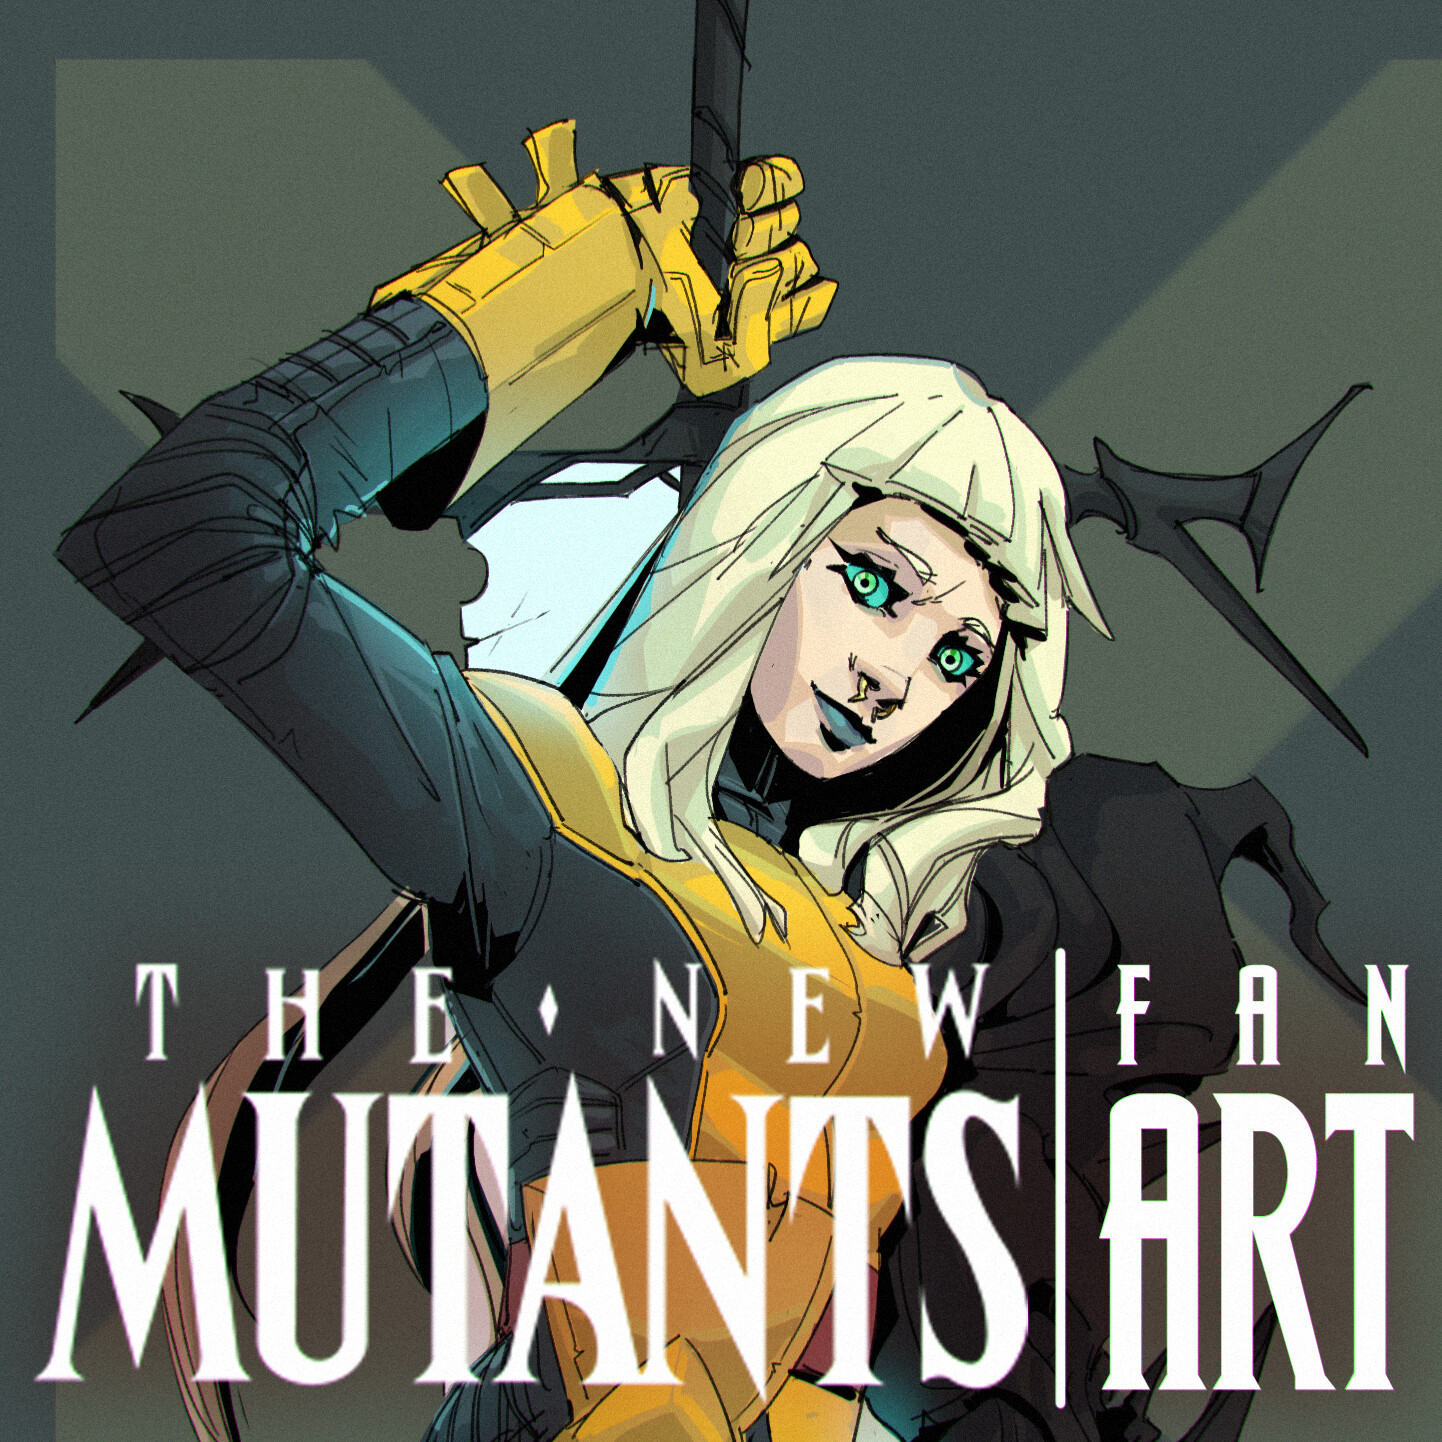 Magik (Poster) Fanmade - The New Mutants by Vit0Zai on DeviantArt